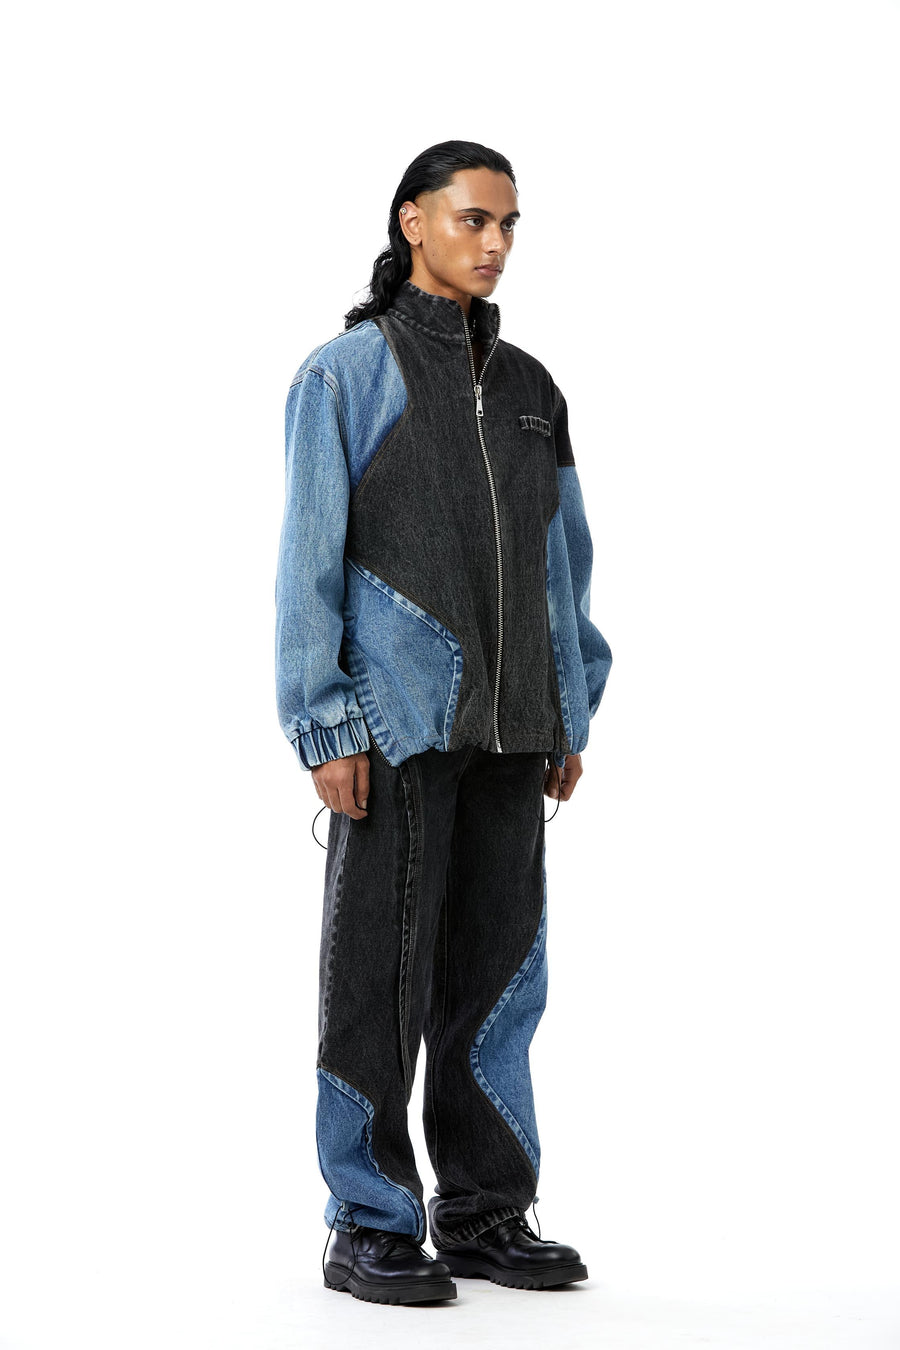 Buy LONGBIDA Jean Jacket for Men Slim Fit Casual Two-tone Panelled Denim  Jacket…, Yellow Red, Medium at Amazon.in